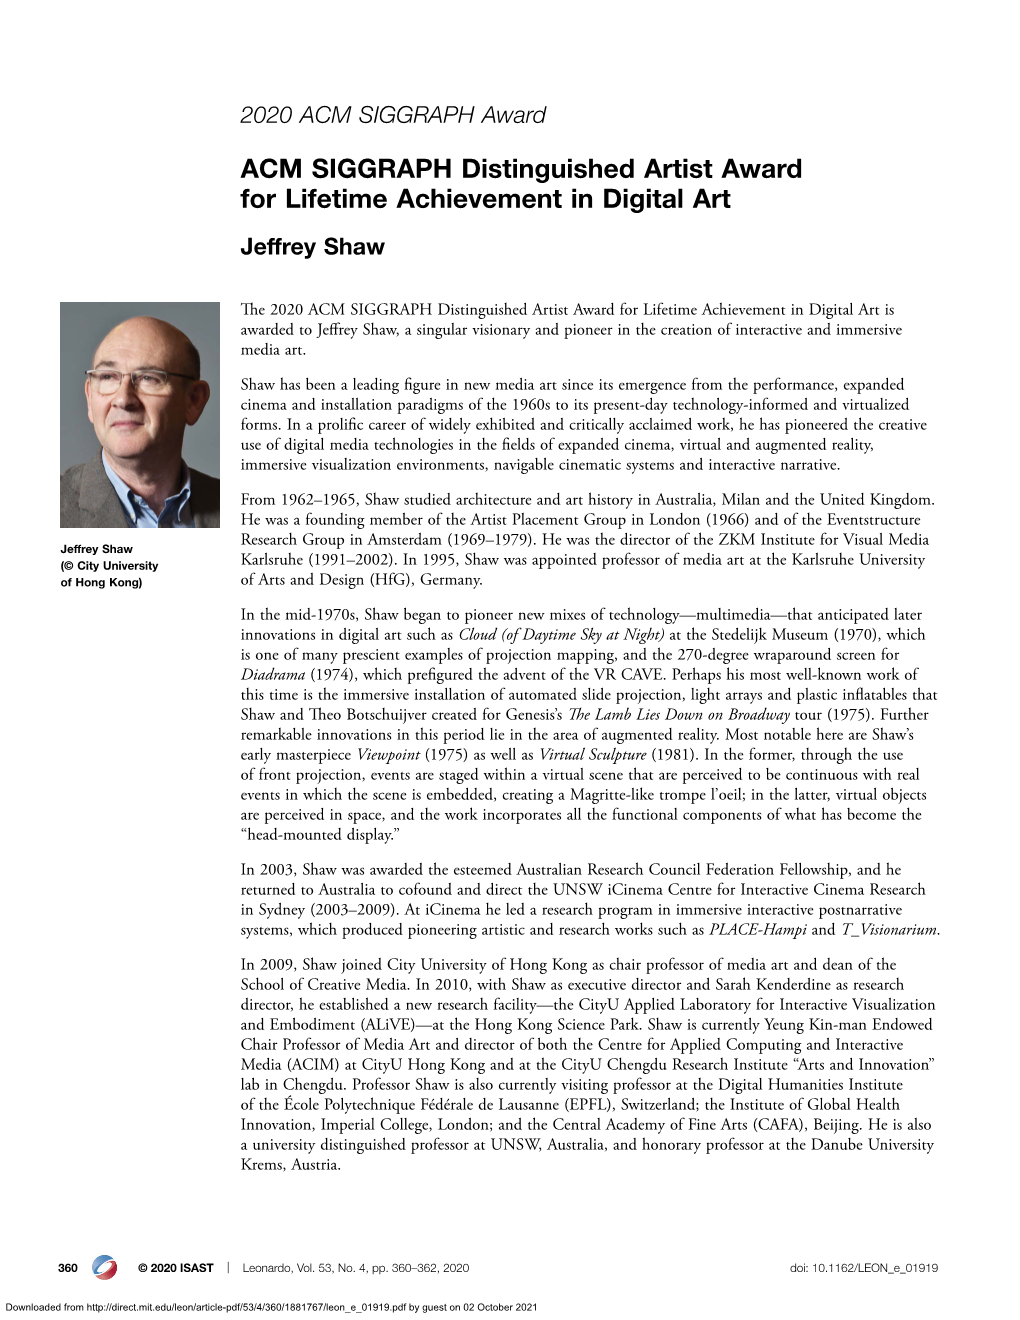 ACM SIGGRAPH Distinguished Artist Award for Lifetime Achievement in Digital Art Jeffrey Shaw